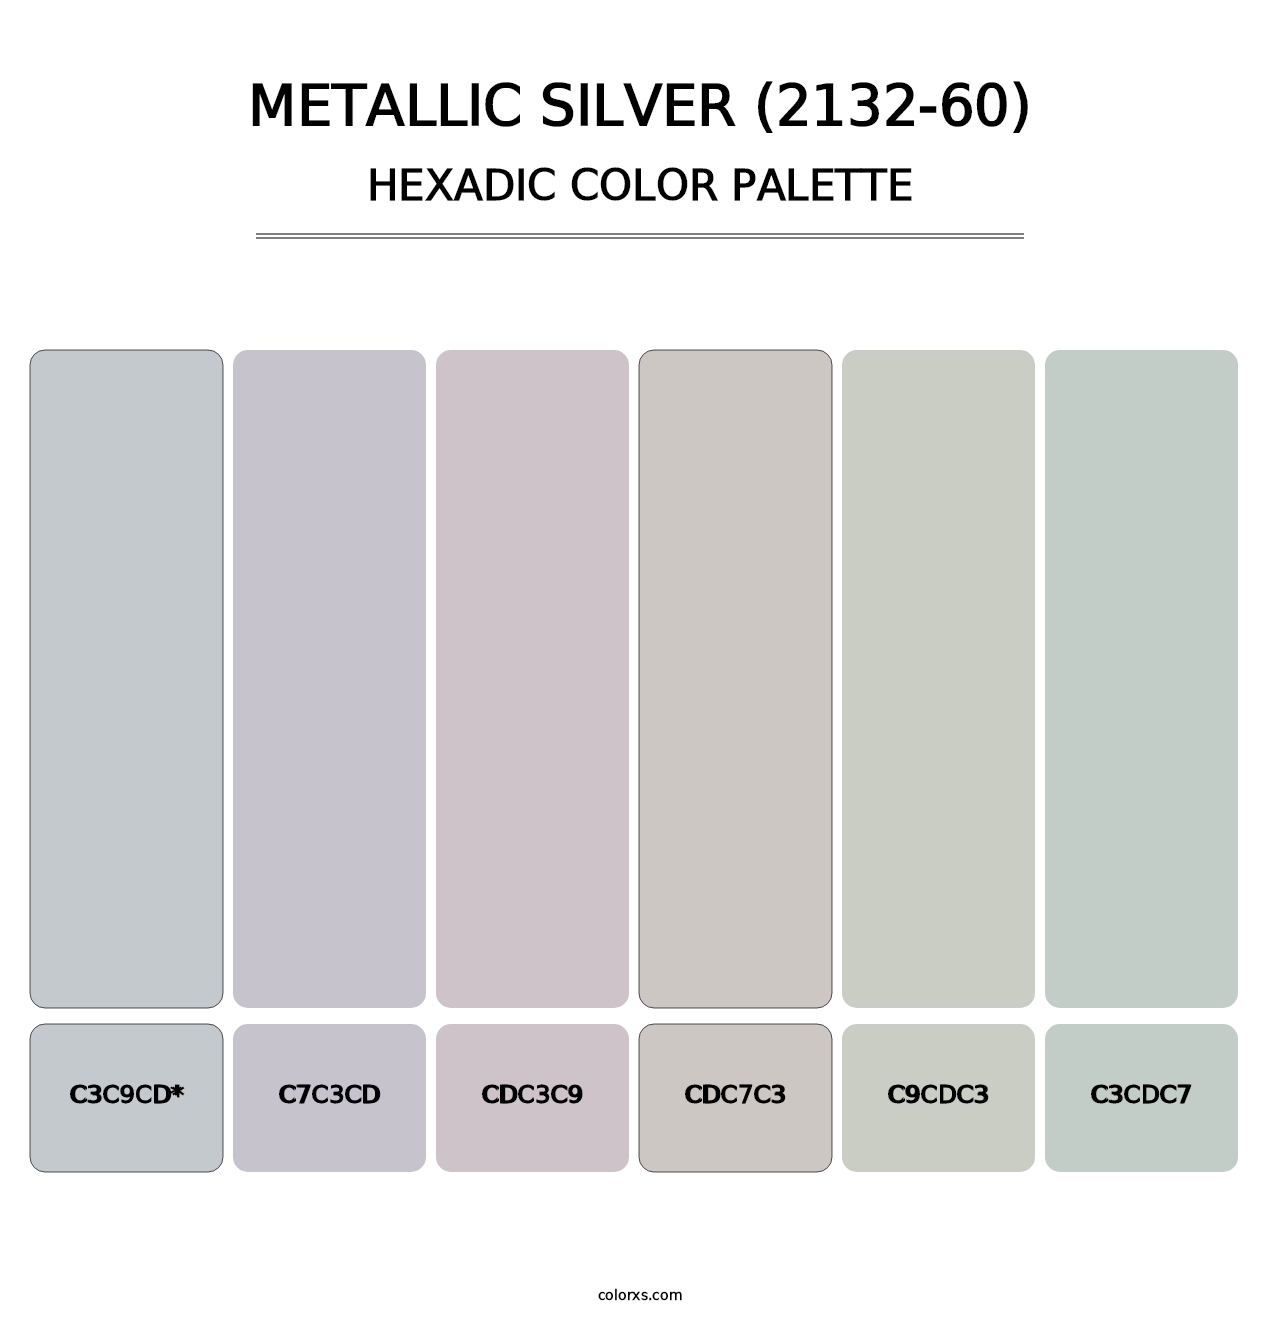 Metallic Silver (2132-60) - Hexadic Color Palette